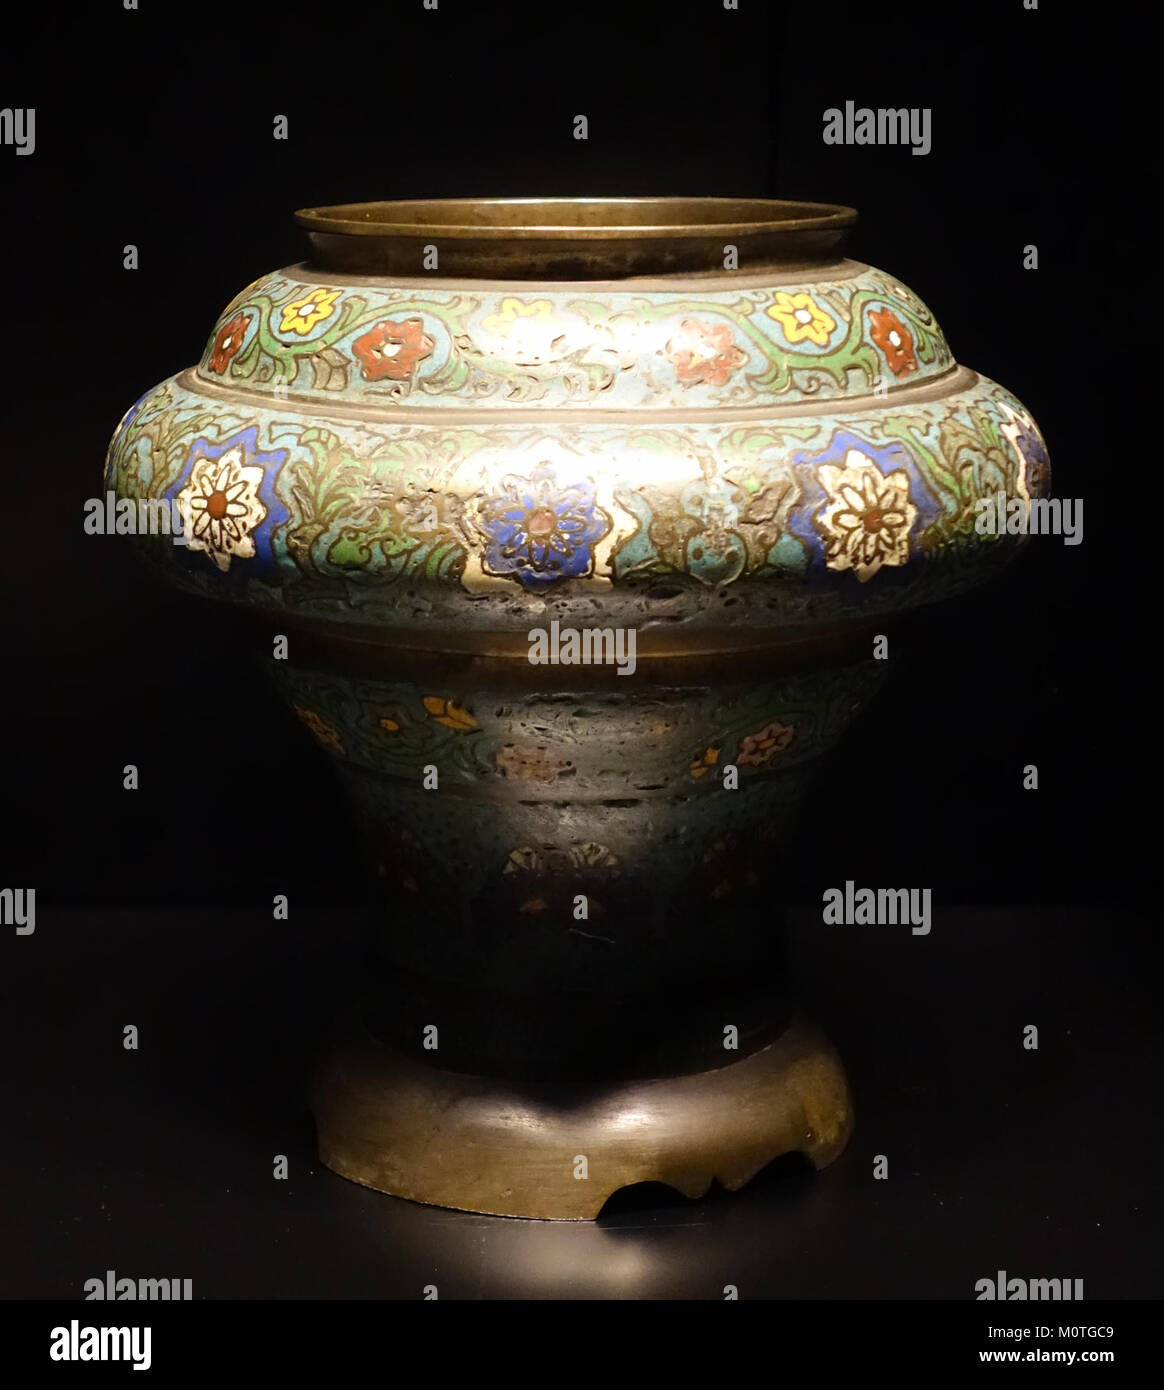 Ceremonial vase, China, Ming dynasty, 17th century, copper enamel - Museu do Oriente - Lisbon, Portugal - DSC06949 Stock Photo